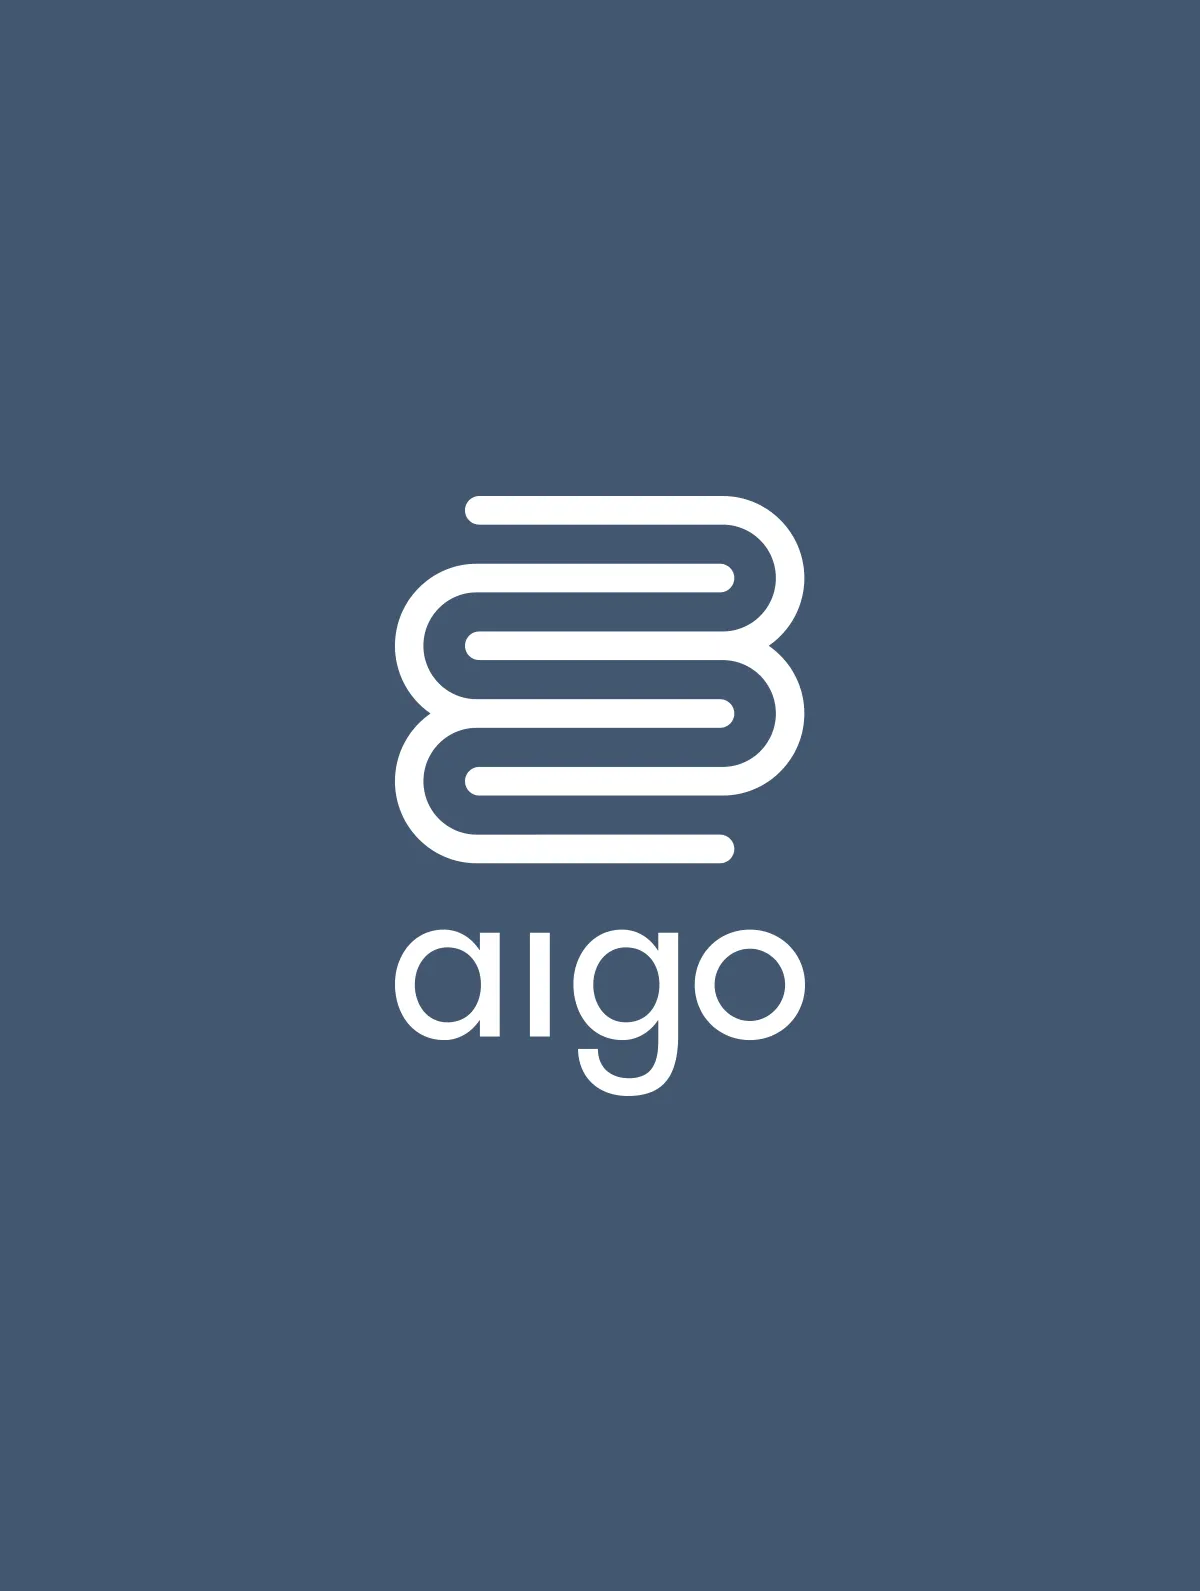 Aigo - 历史悠久的医疗保健机构焕发新貌。 - By HDG